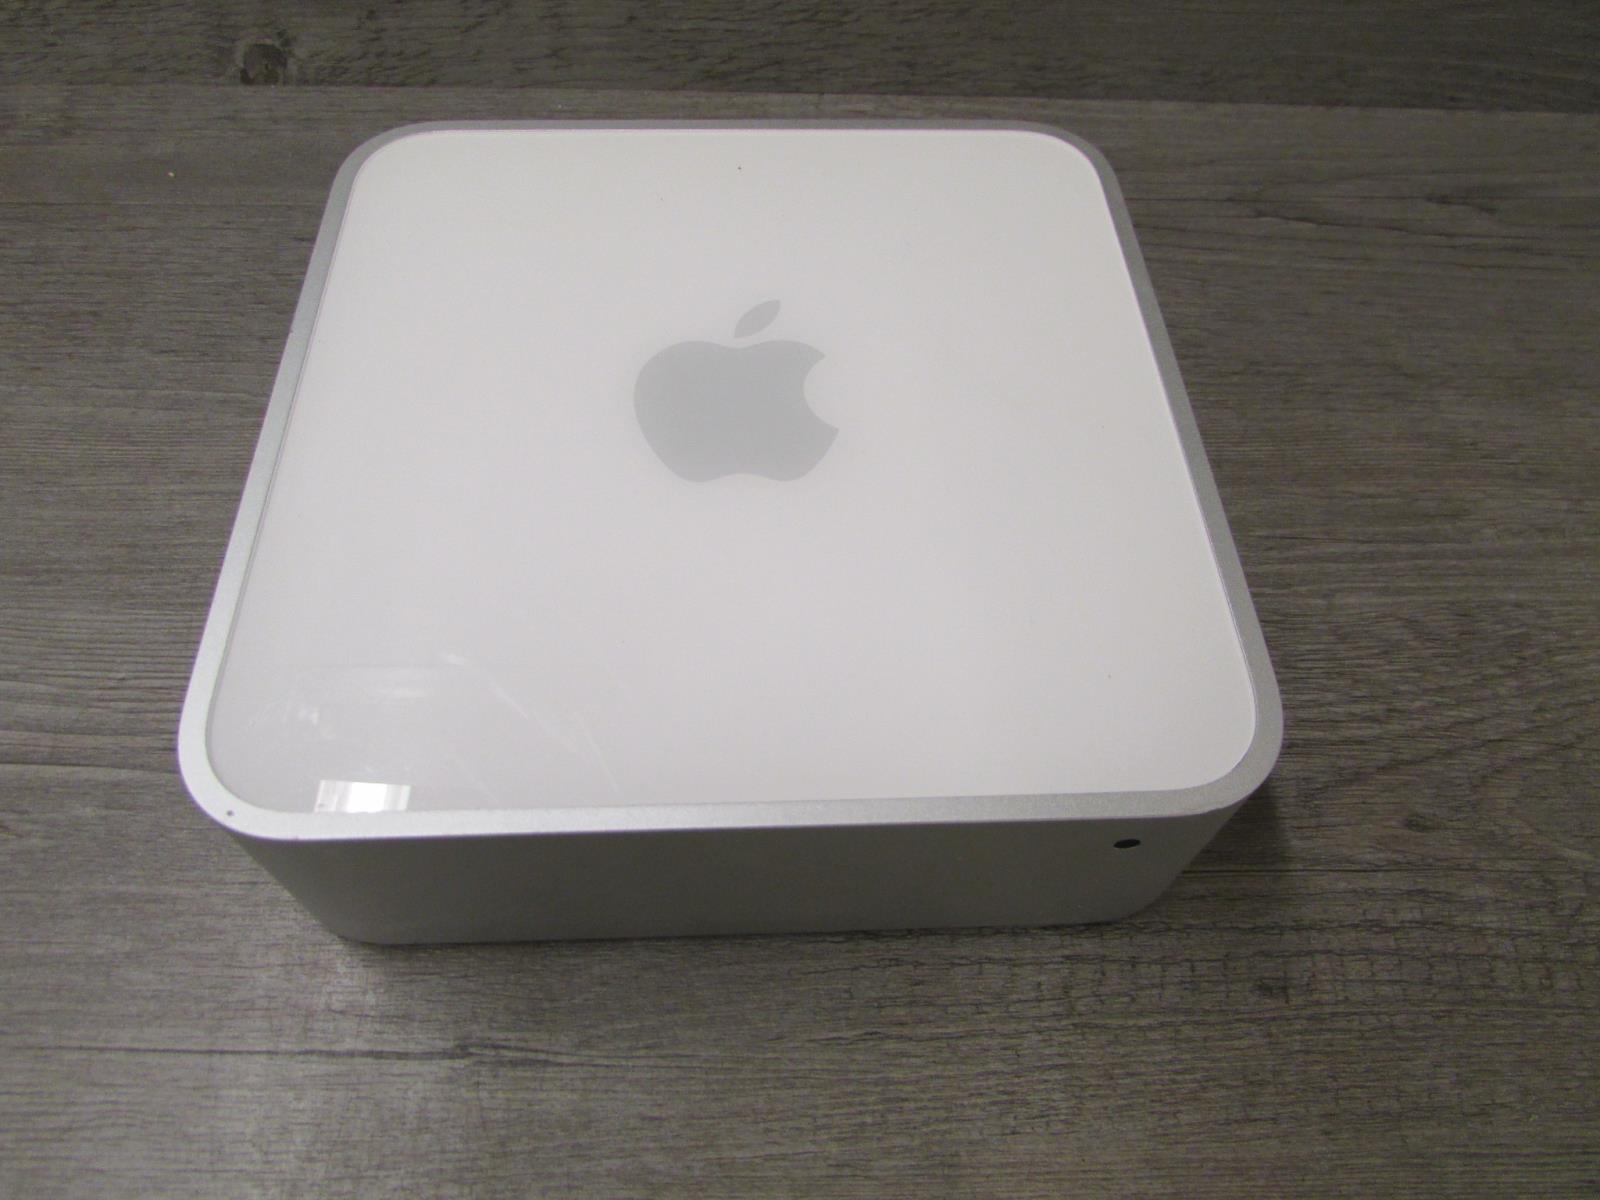 apple mac mini core a1283 upgrade to mac os 10.9.5